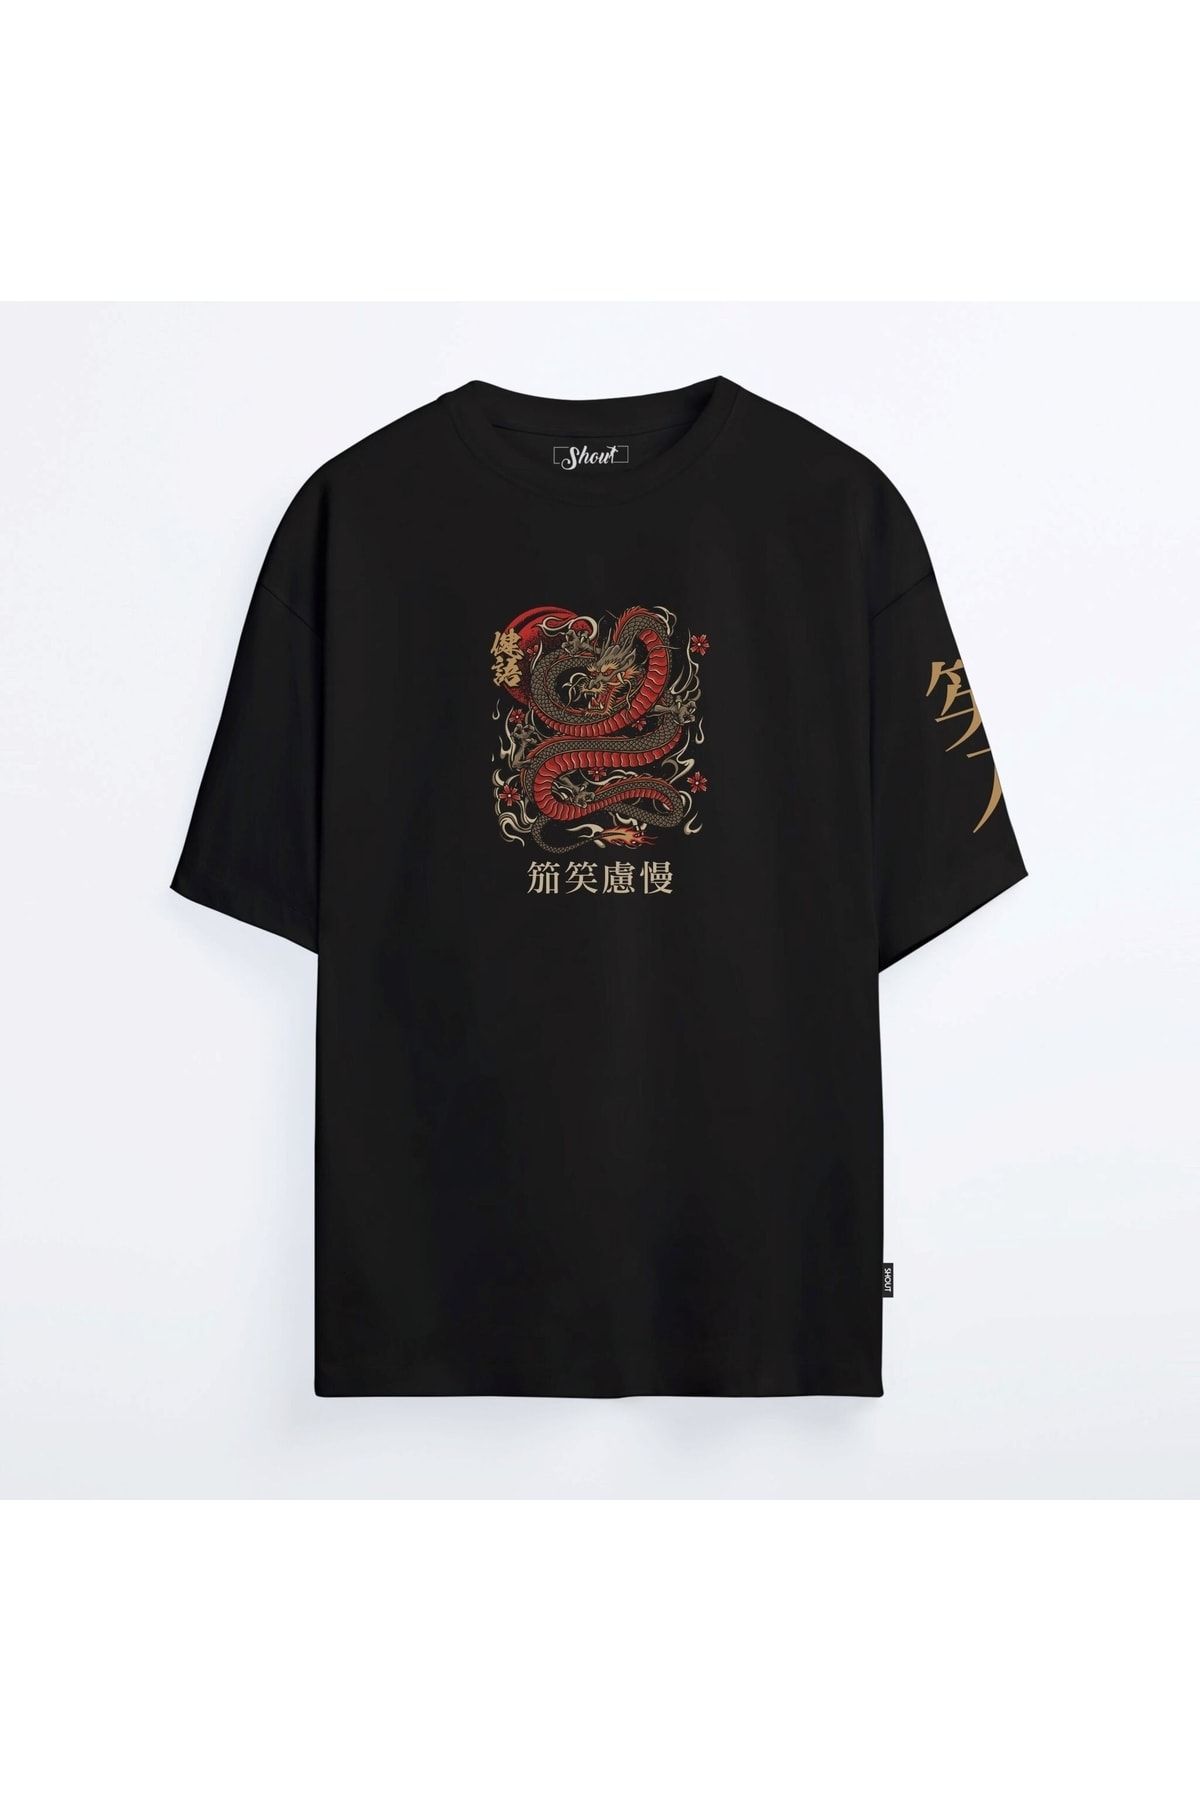 Shout Oversize Dragon Oldschool Unisex T-shirt